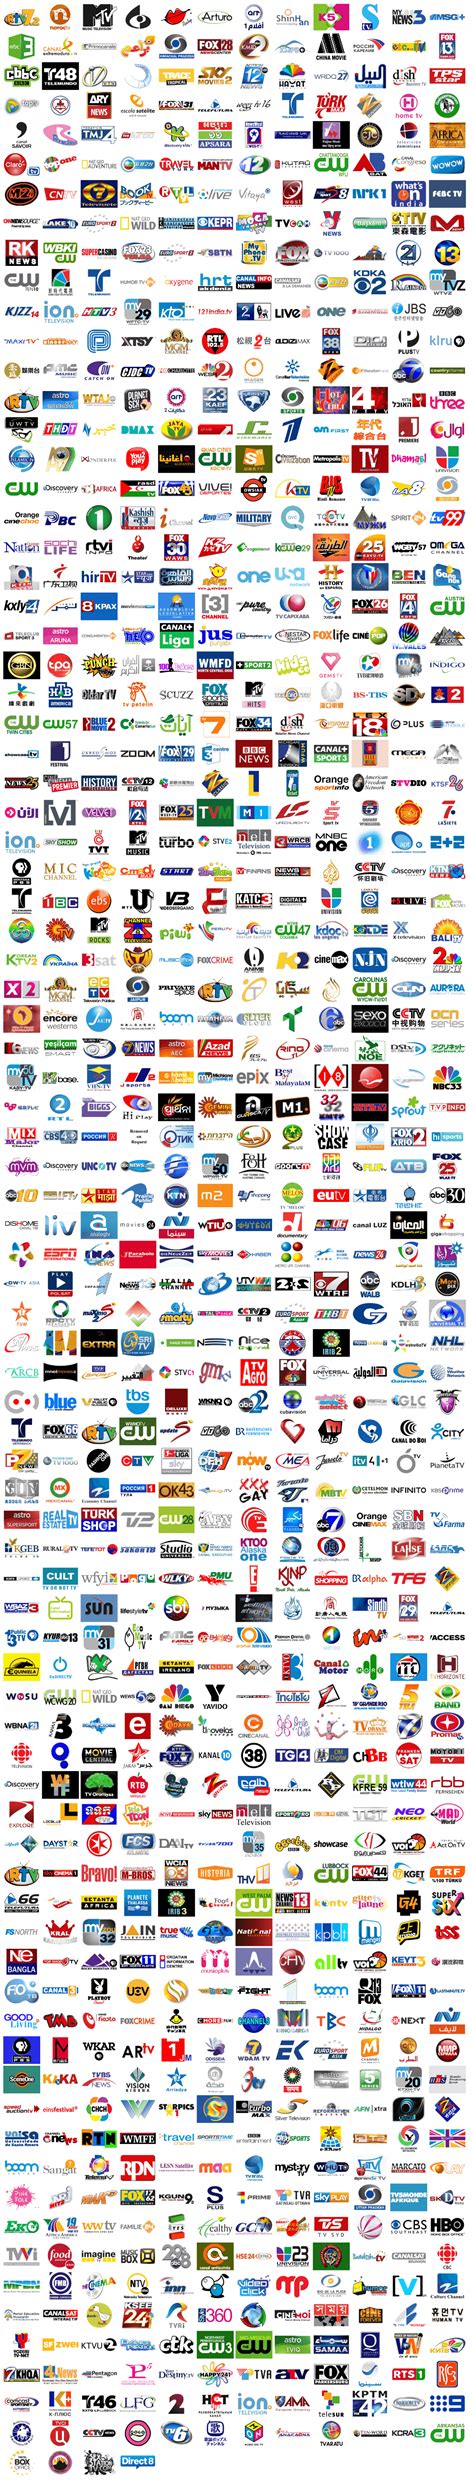 tv channels logo logodix